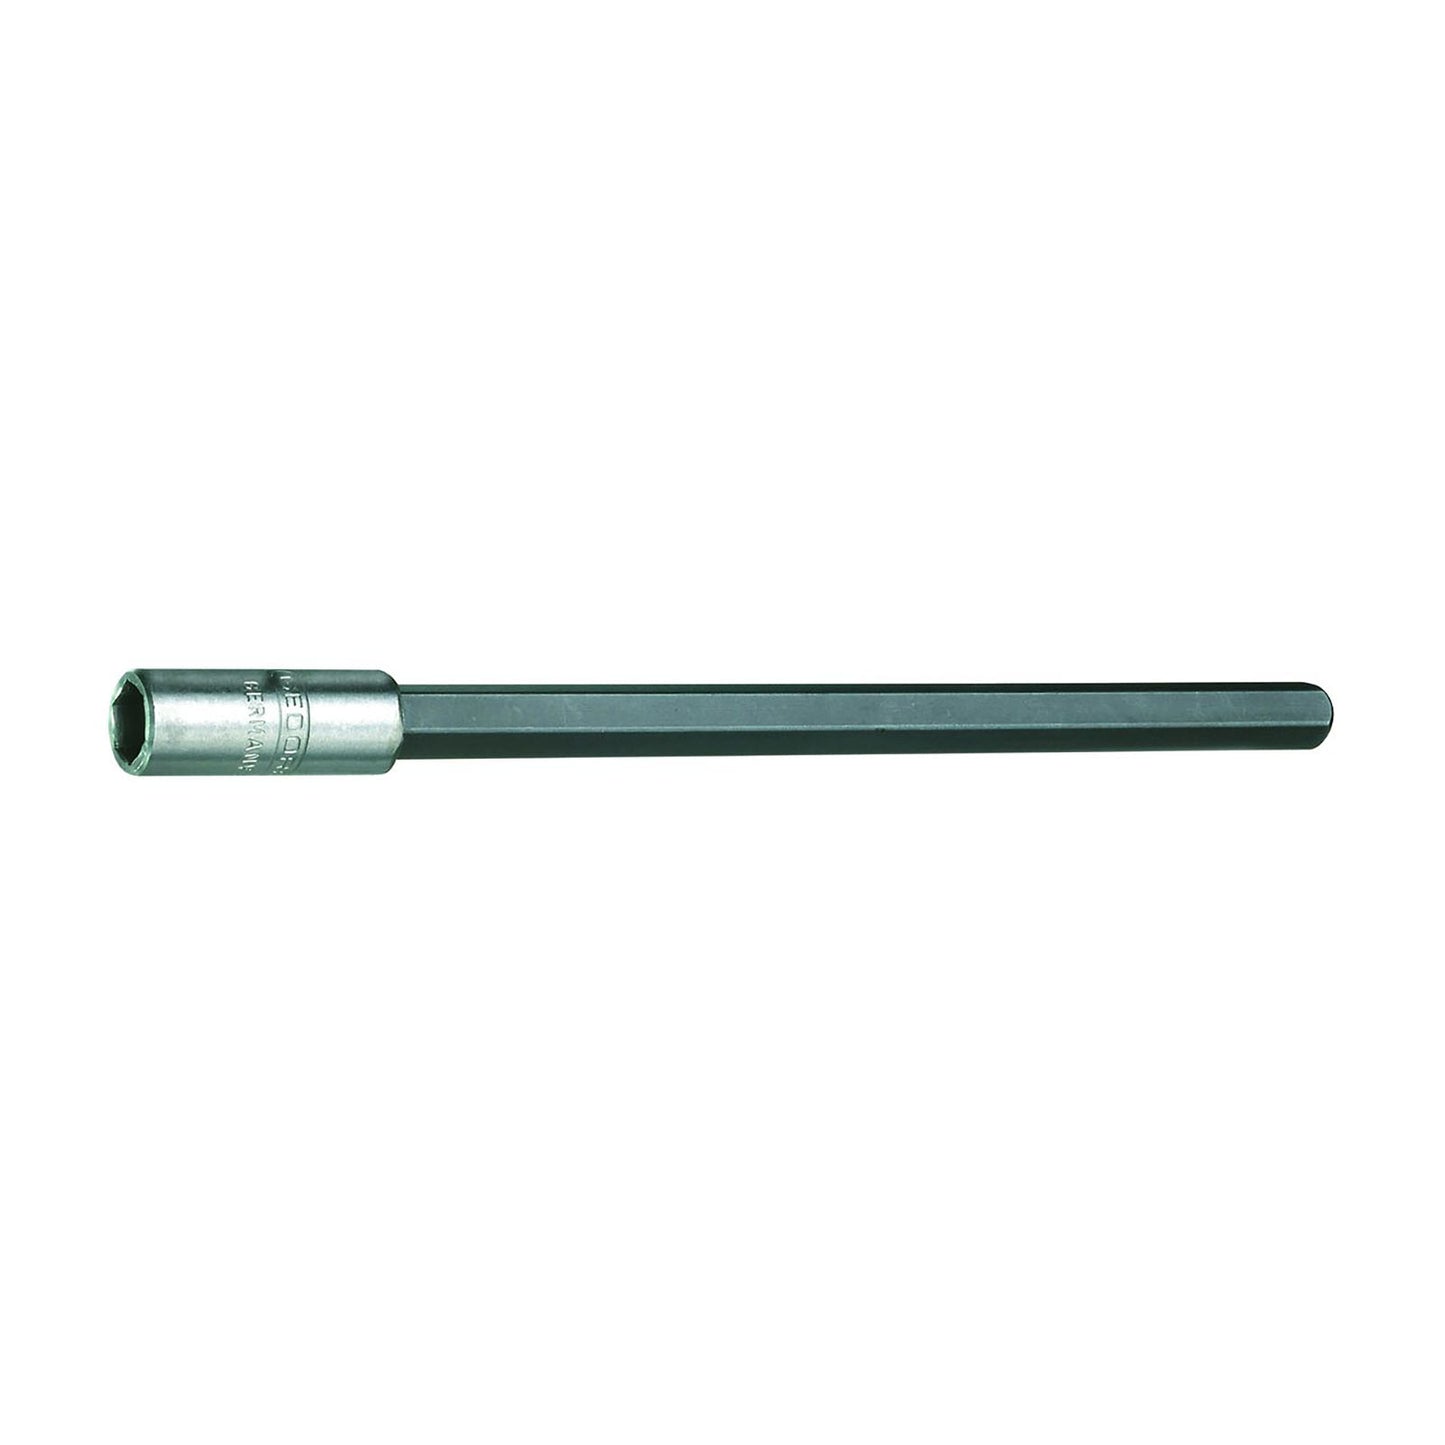 GEDORE 699 L - Magnetic Bit Holder Long 130 mm (1802437)